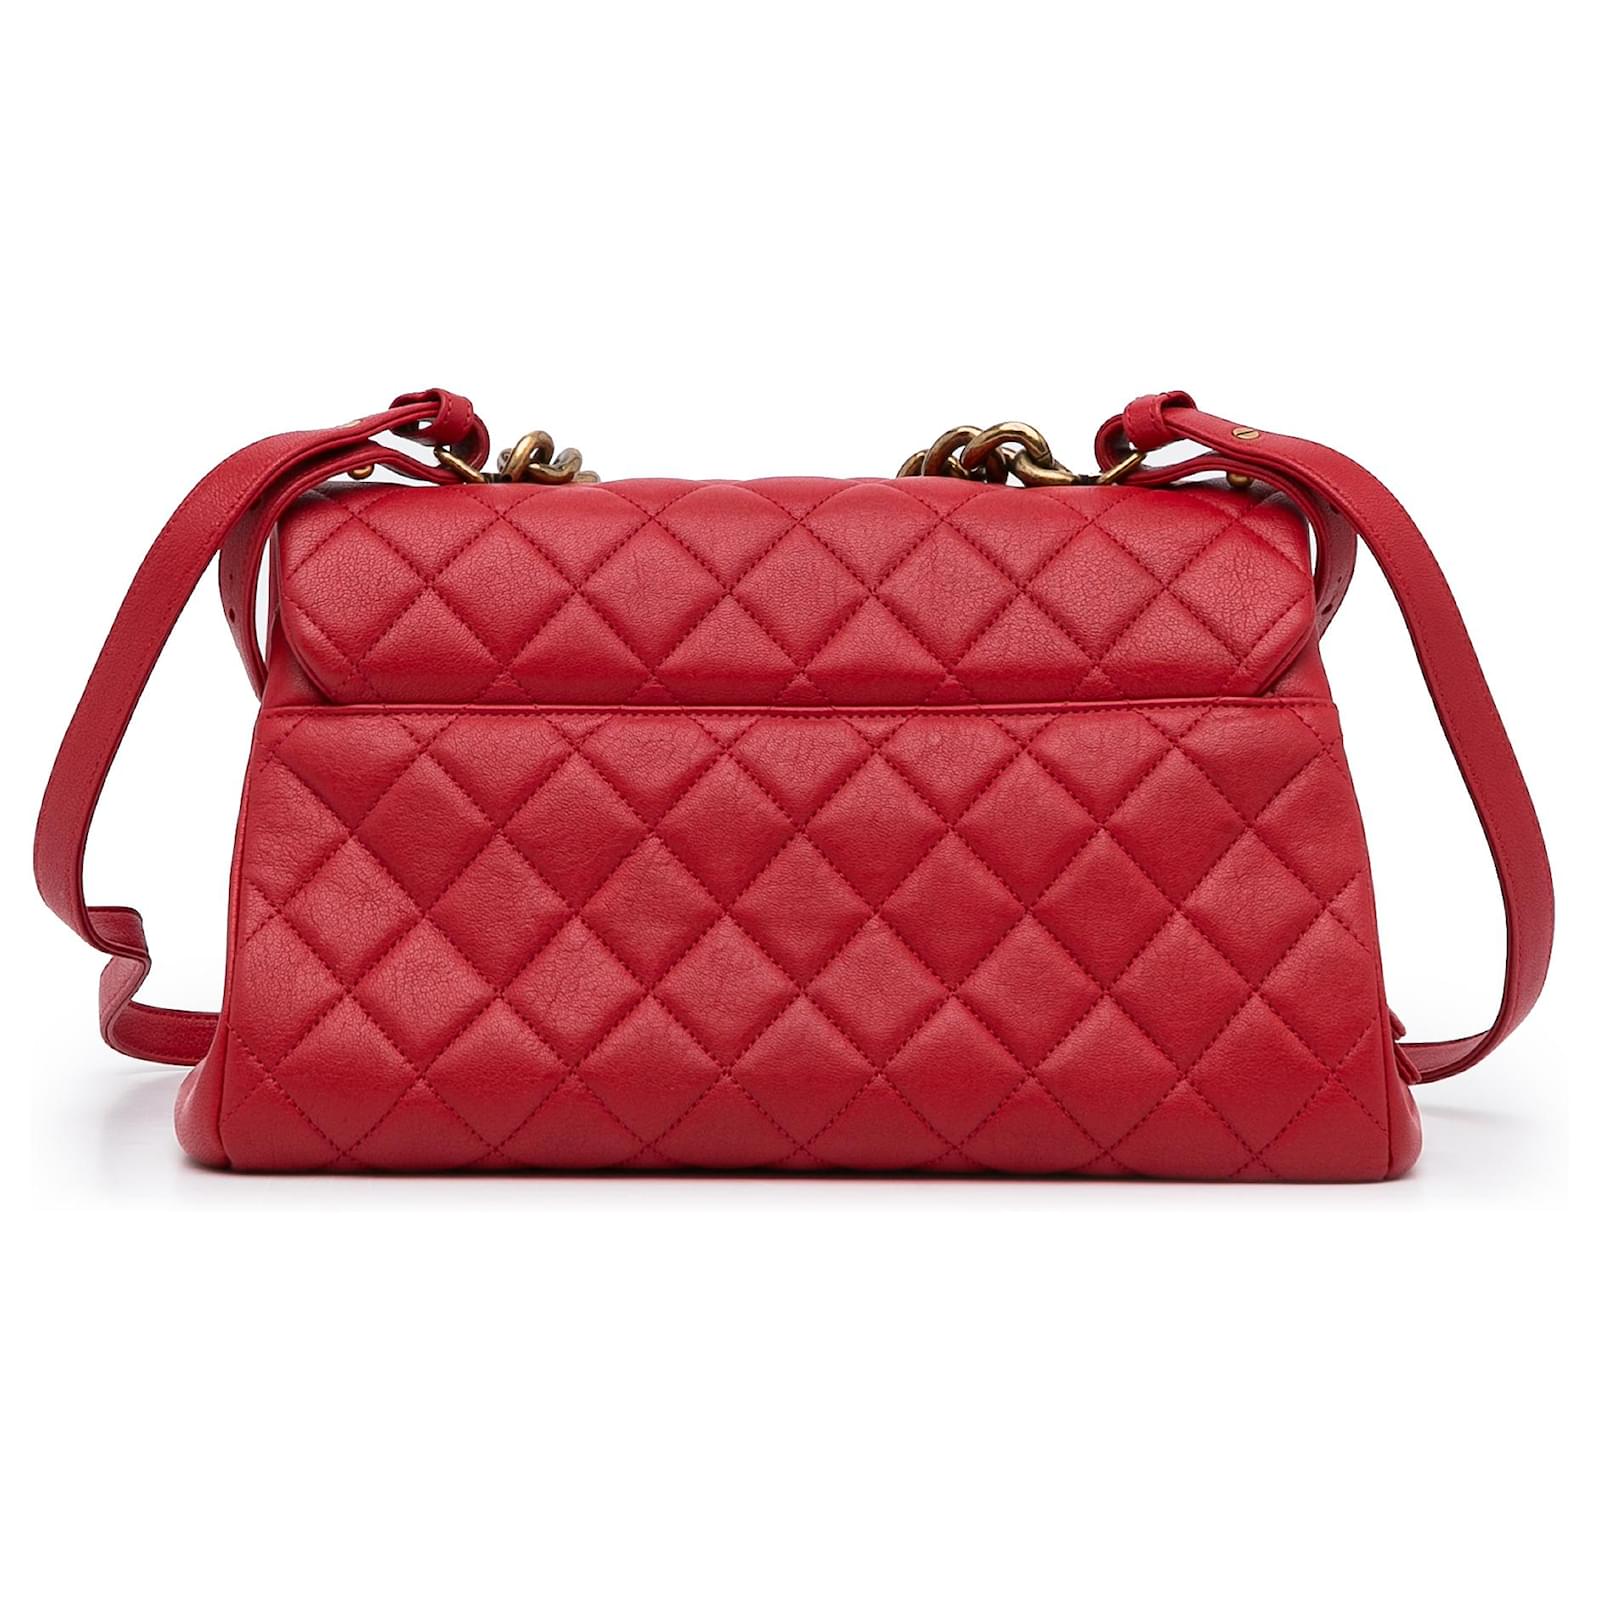 Chanel Red Large Paris Rome Calfskin Trapezio Bag